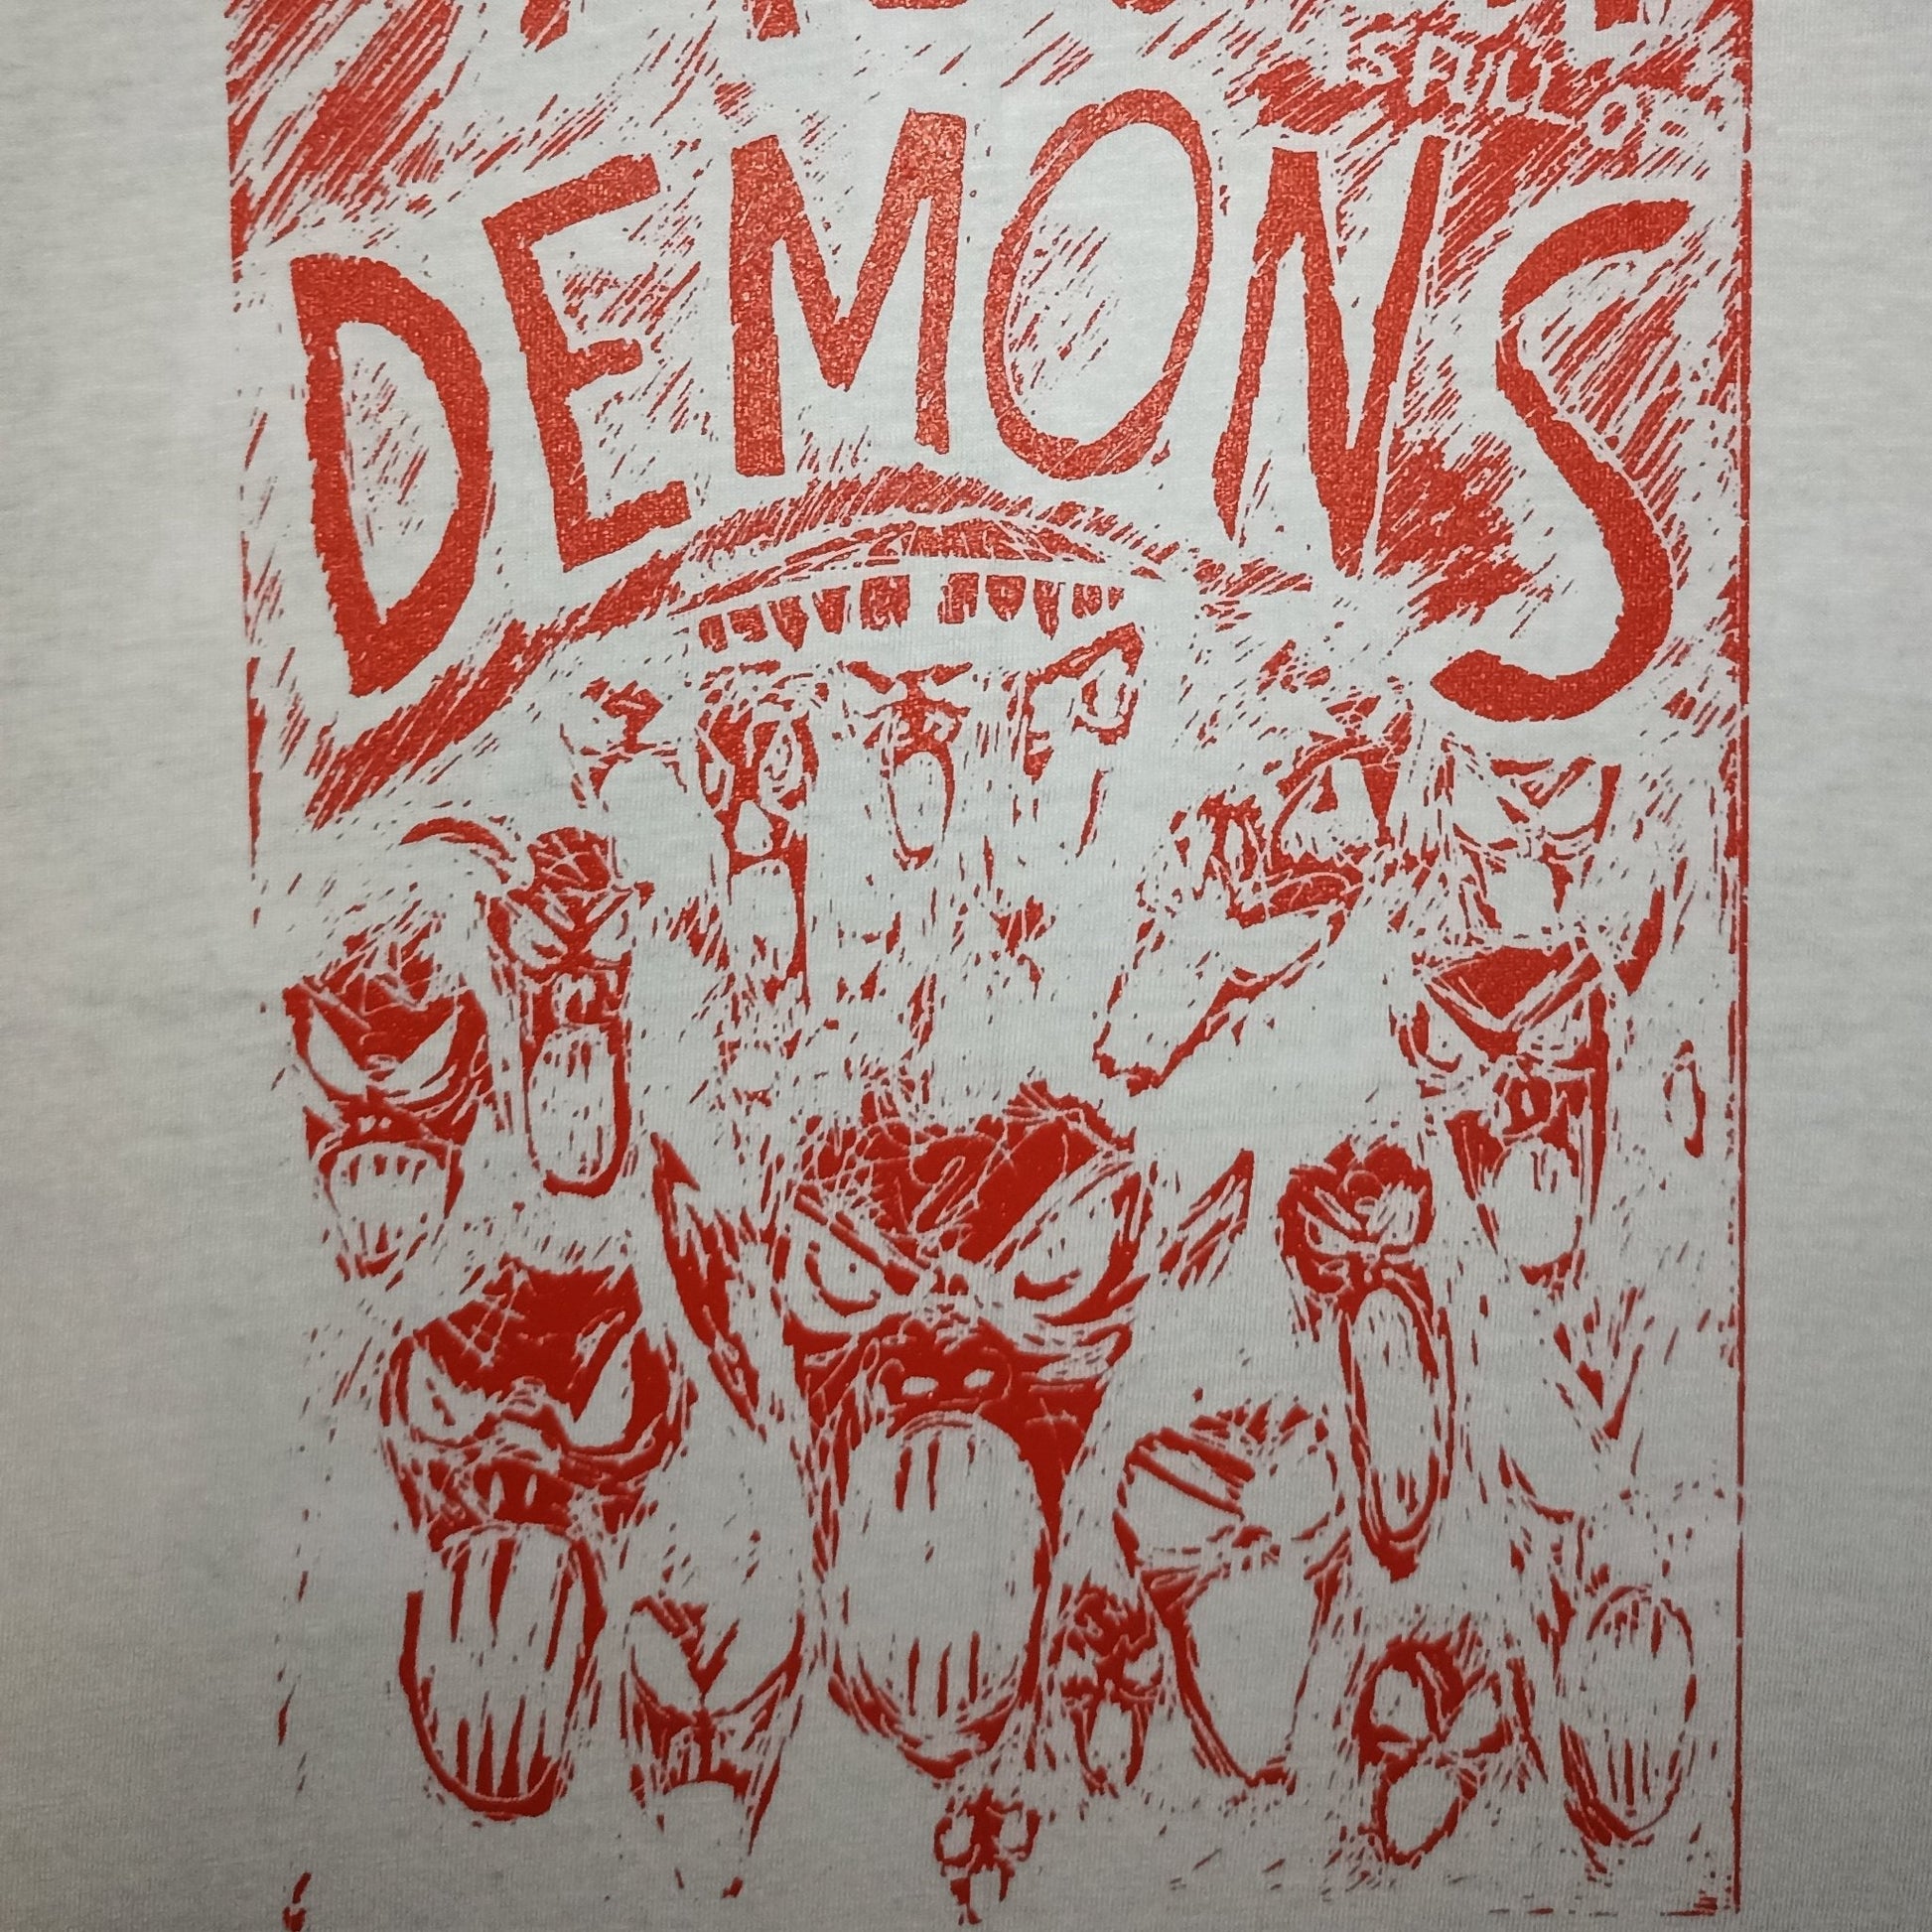 Throwing Muses 'My mouth is full of Demons', 'Ellen West' tee - screen printed t-shirt - ElRat/Hersh - ElRatDesigns - T Shirt